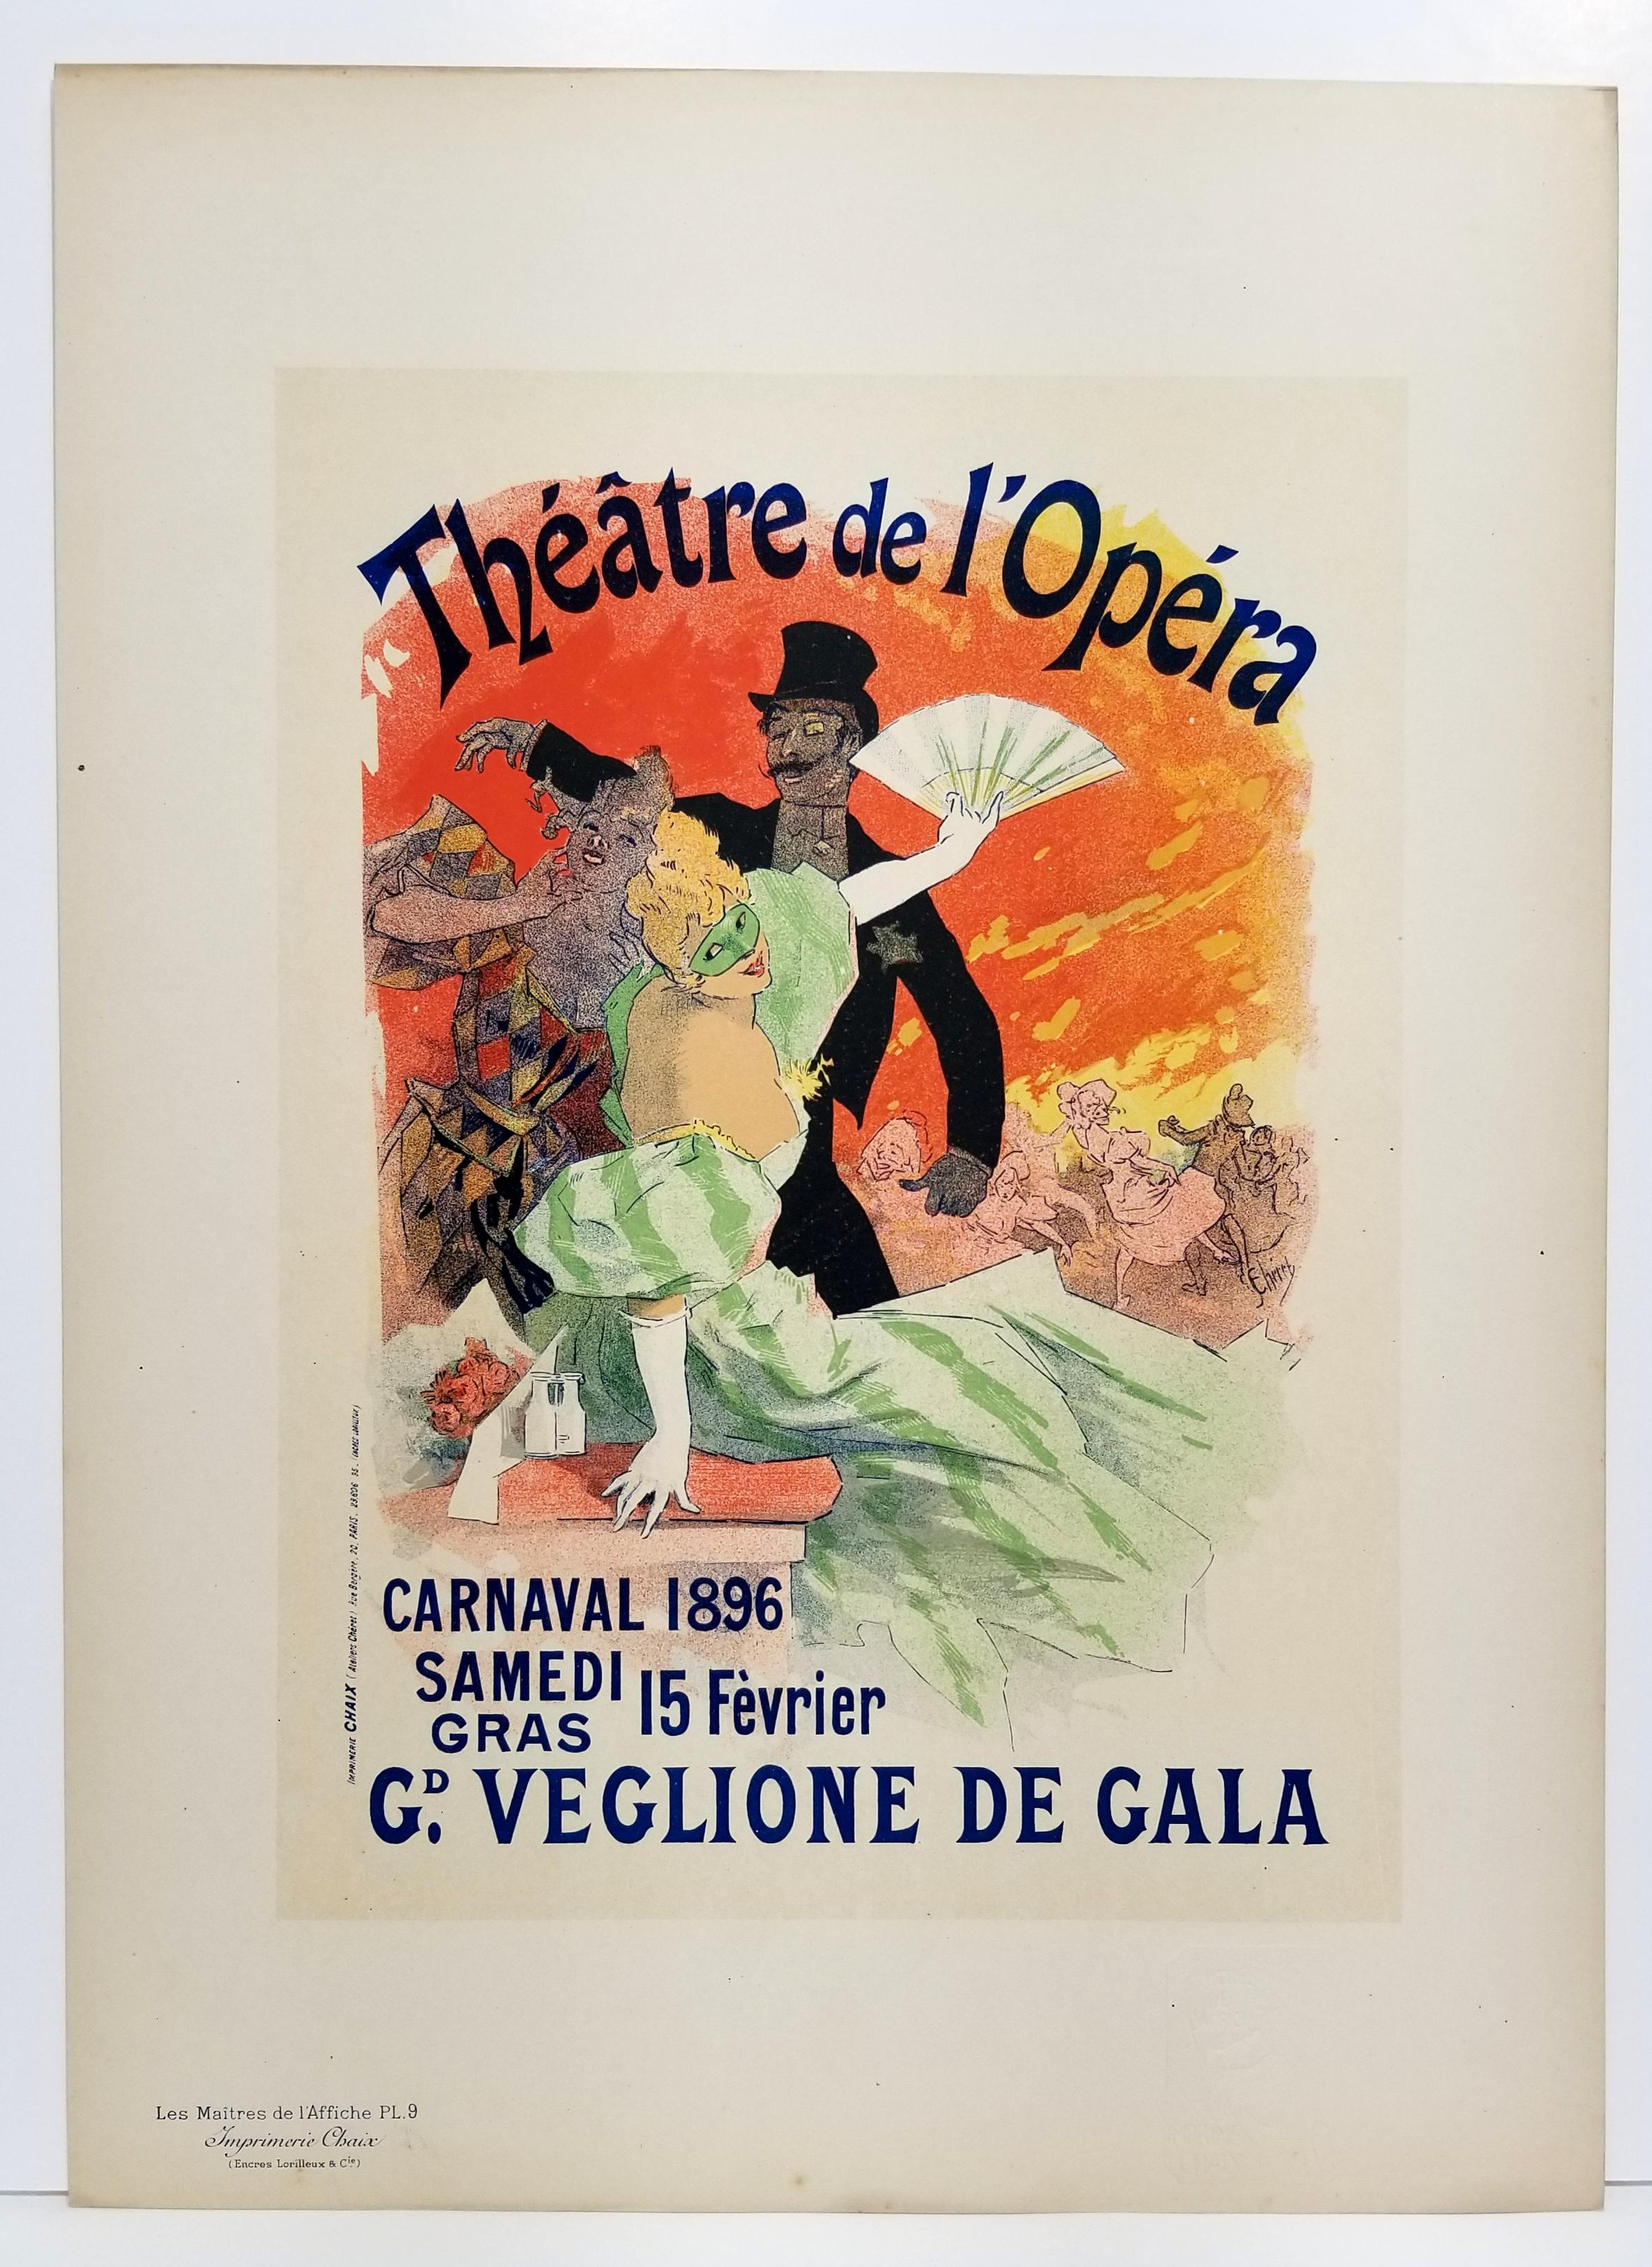 Carnaval, Grand Veglione de Gala.  - Print by Jules Chéret